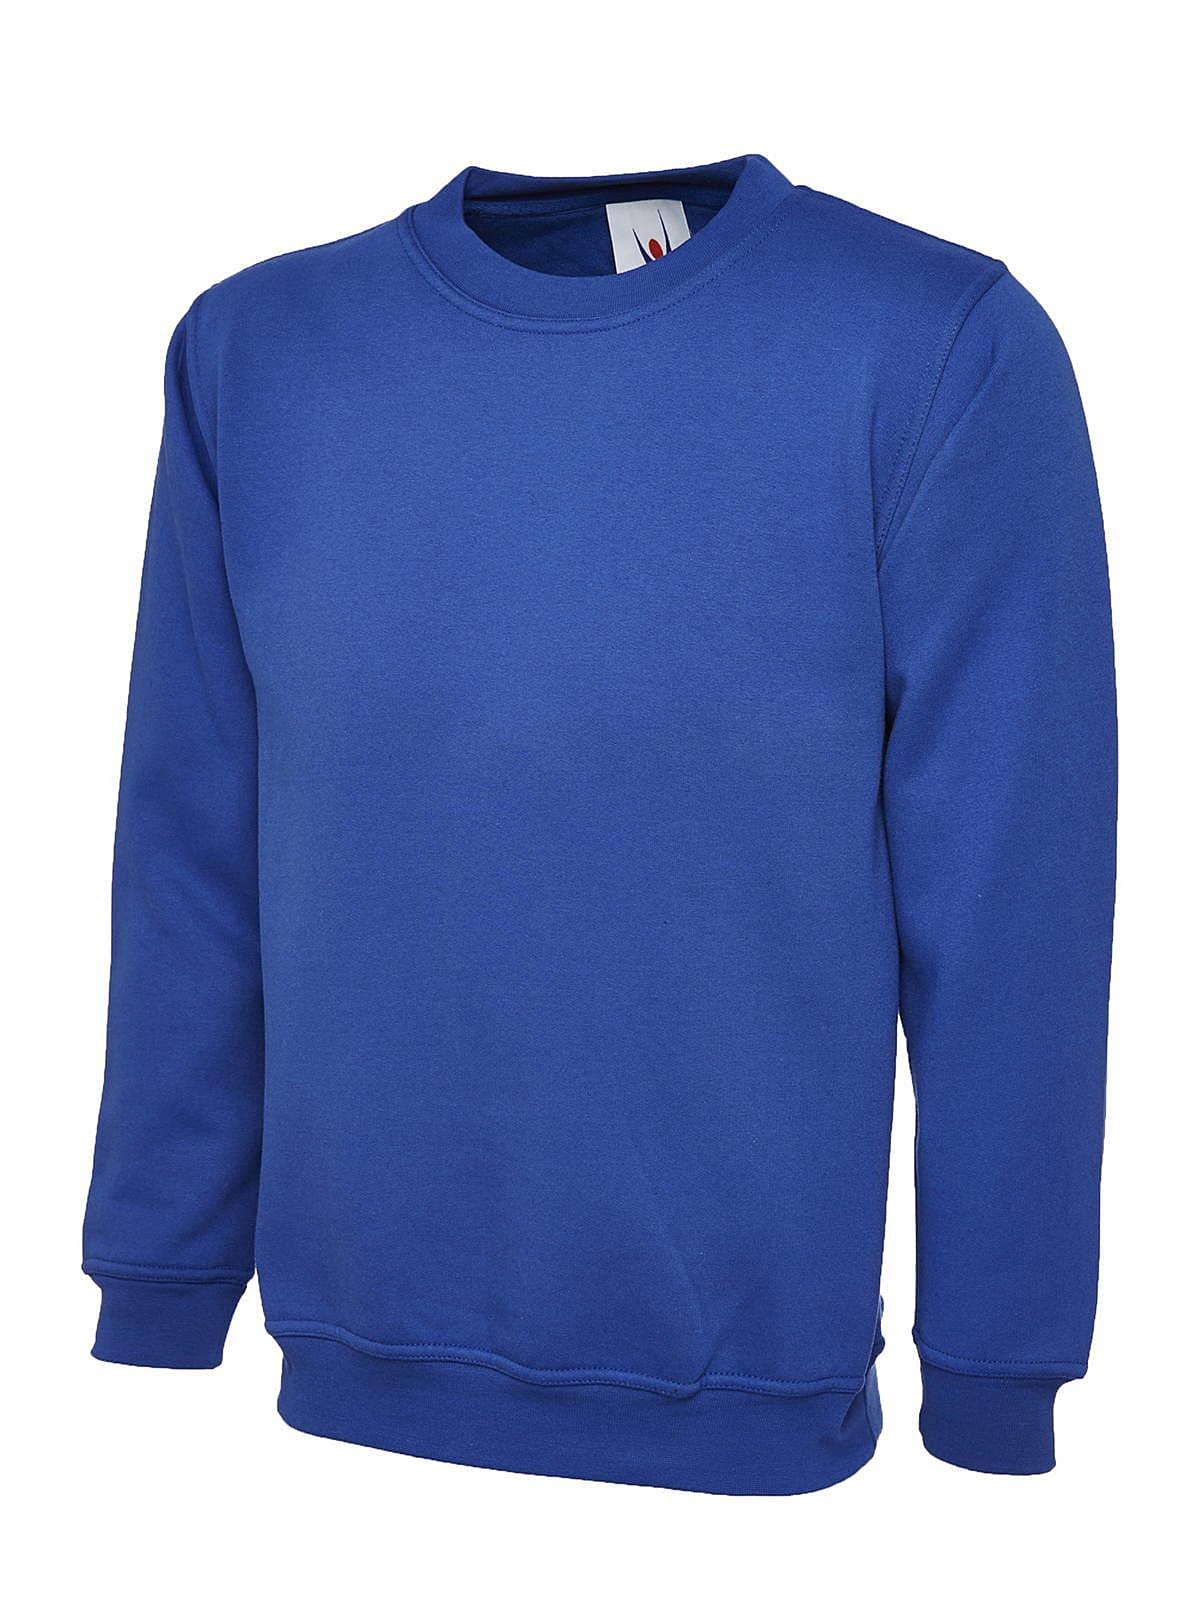 Uneek 300GSM Classic Sweatshirt in Royal Blue (Product Code: UC203)